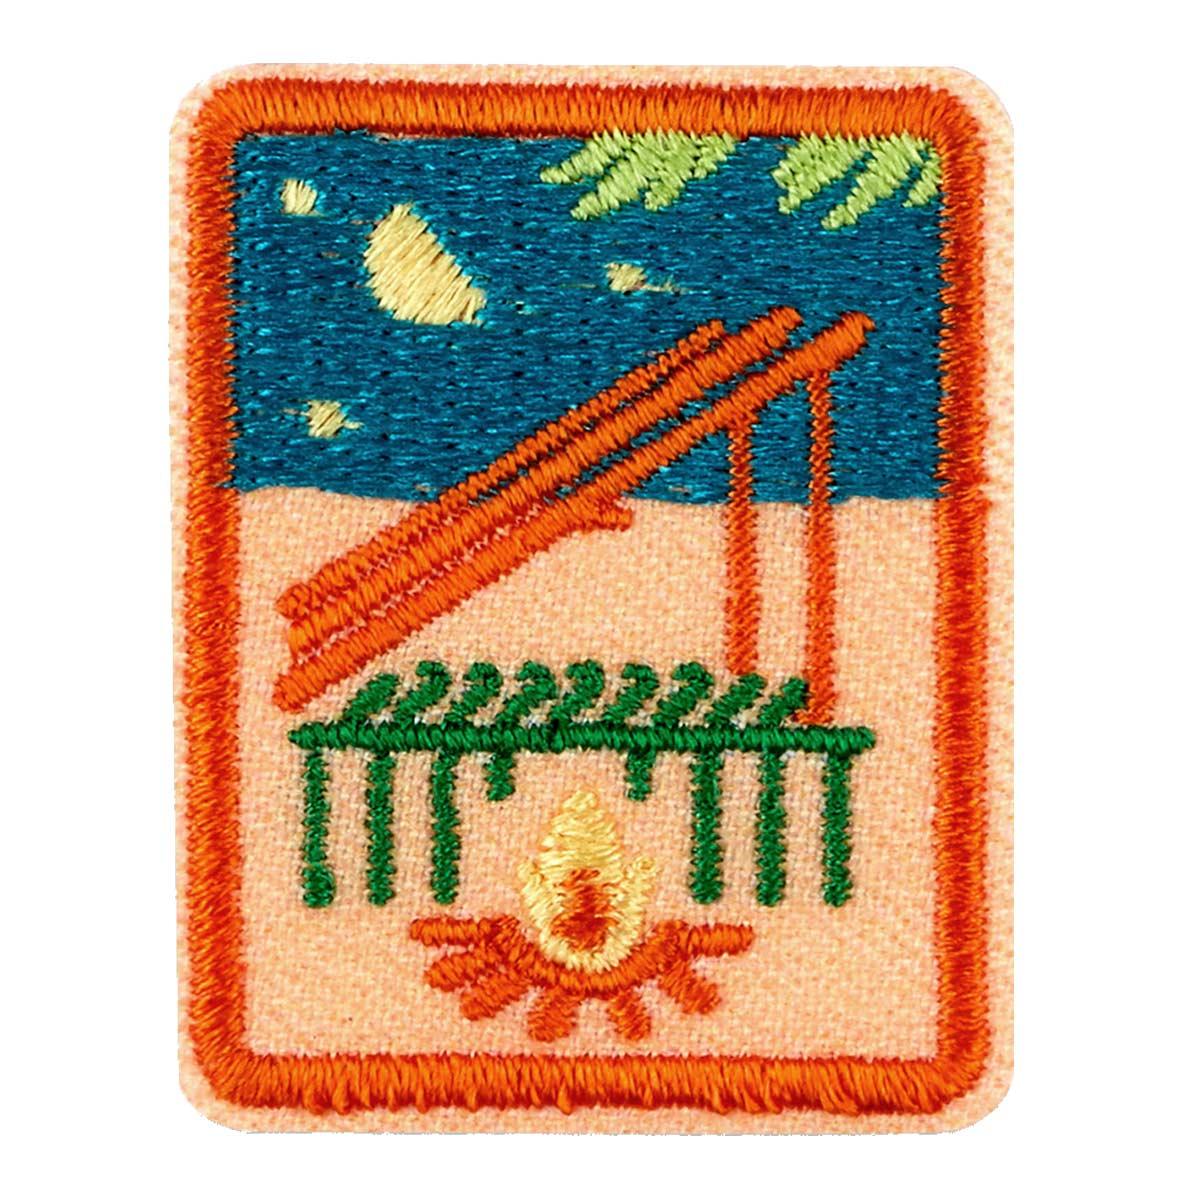 senior outdoor journey badges